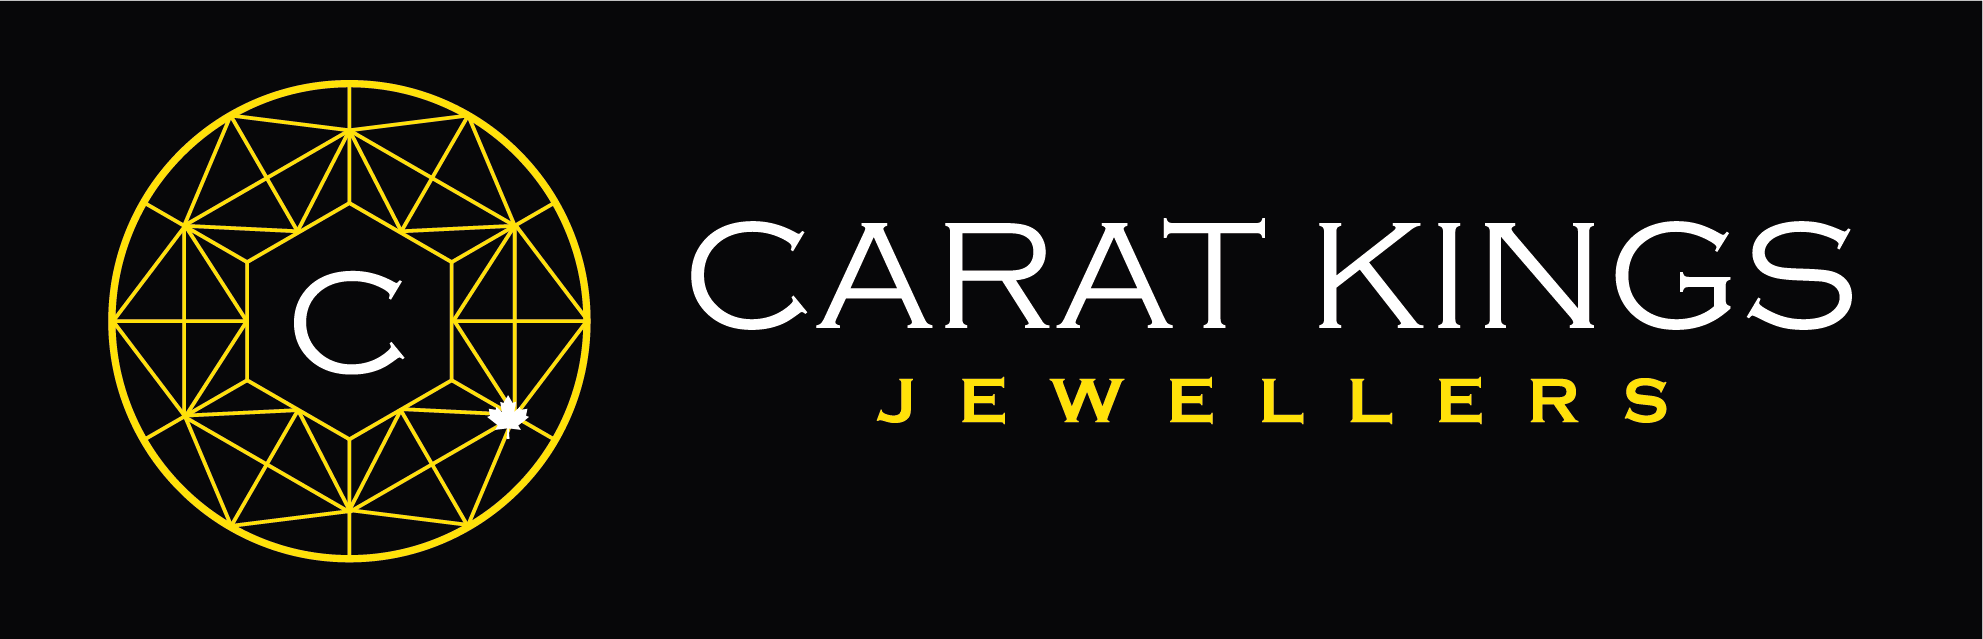 Carat Kings Jewellers